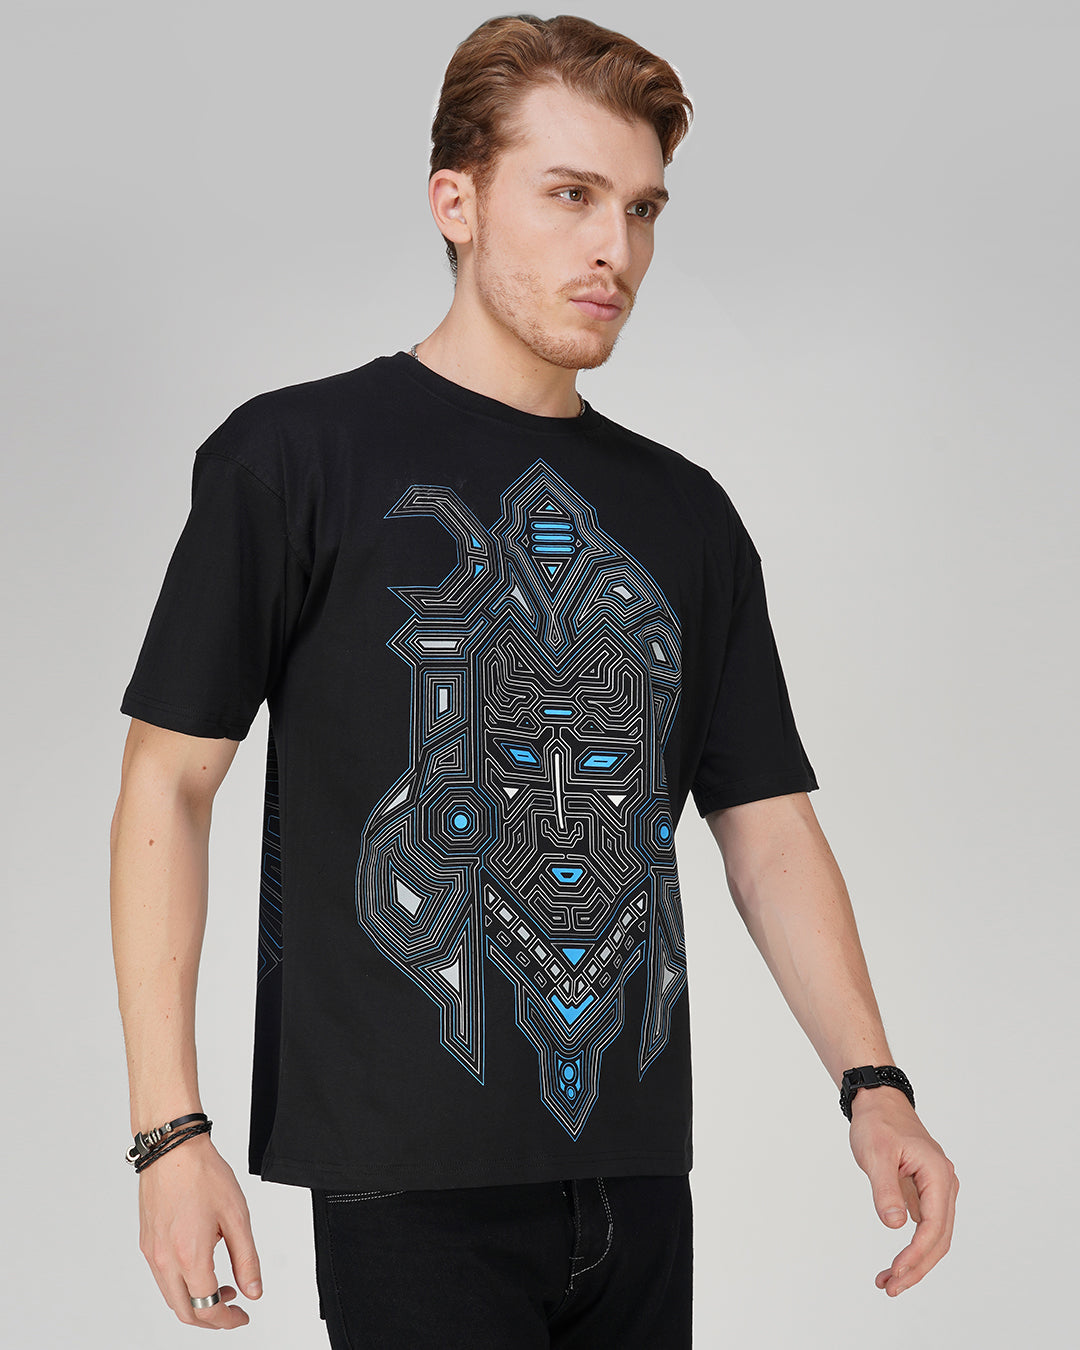 Shiva Face | UV Light Reactive & Glow In Dark | Oversized T-Shirt